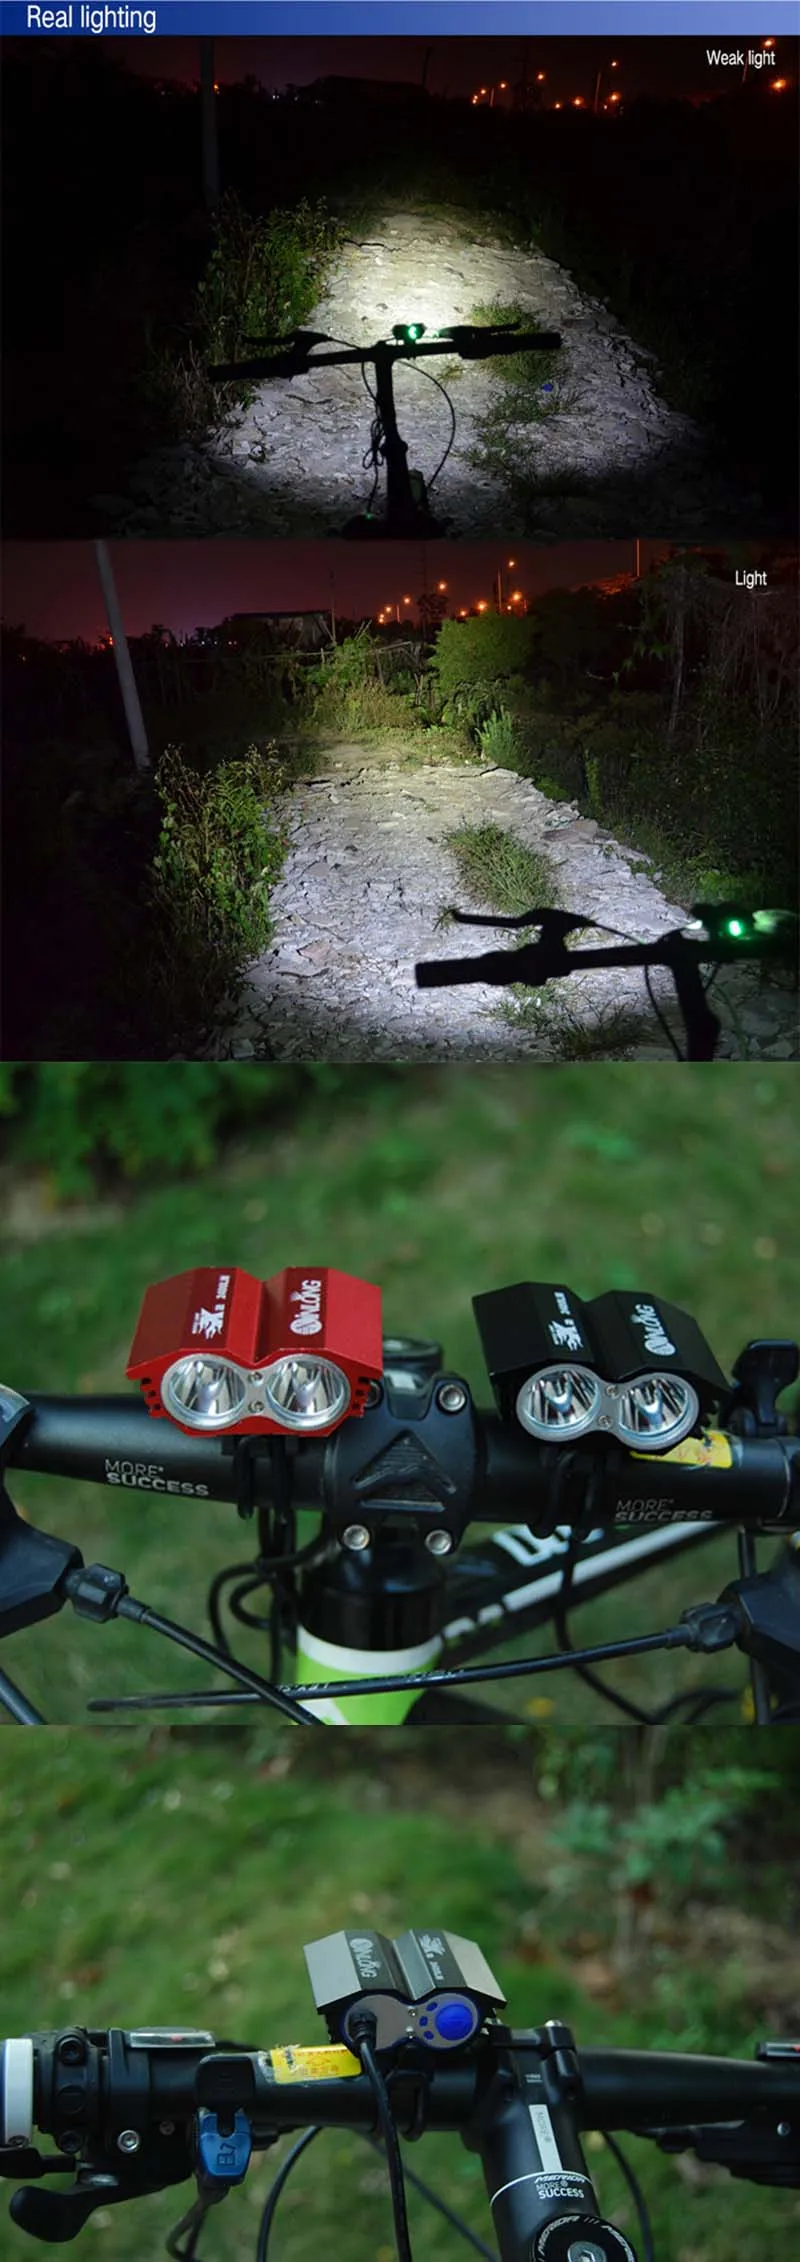 7000 Lumens LED Cycling Bike Bicycle Light Head front Lights flash light+Back Safety Rear Lamp Lampara Para Bicicleta LT0068 (1)